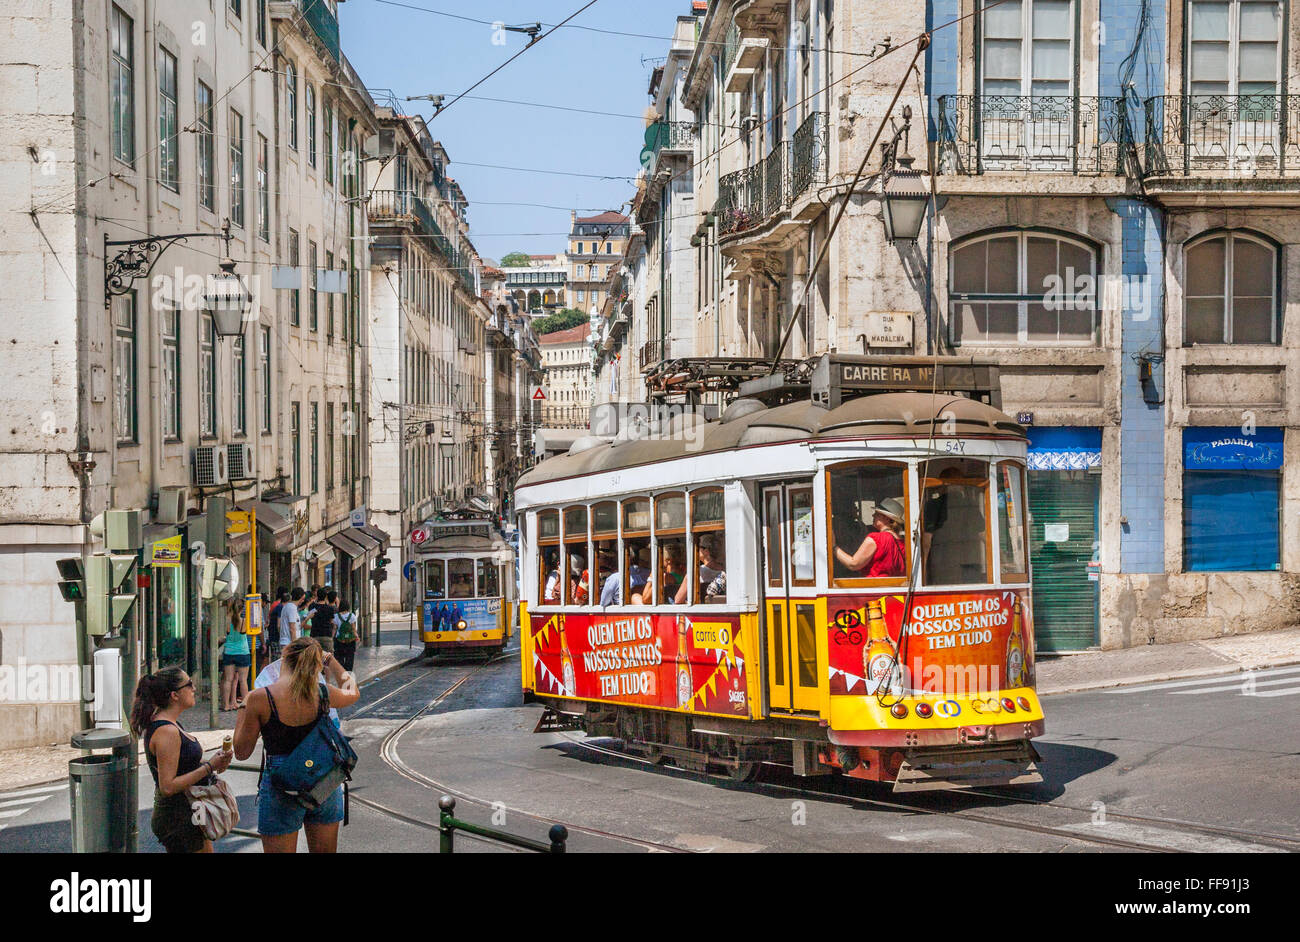 Portugal, Lisbon, Tram 28 at Largo da Madalena in the central Lisbon neighbourhood of Baixa Pombalina Stock Photo